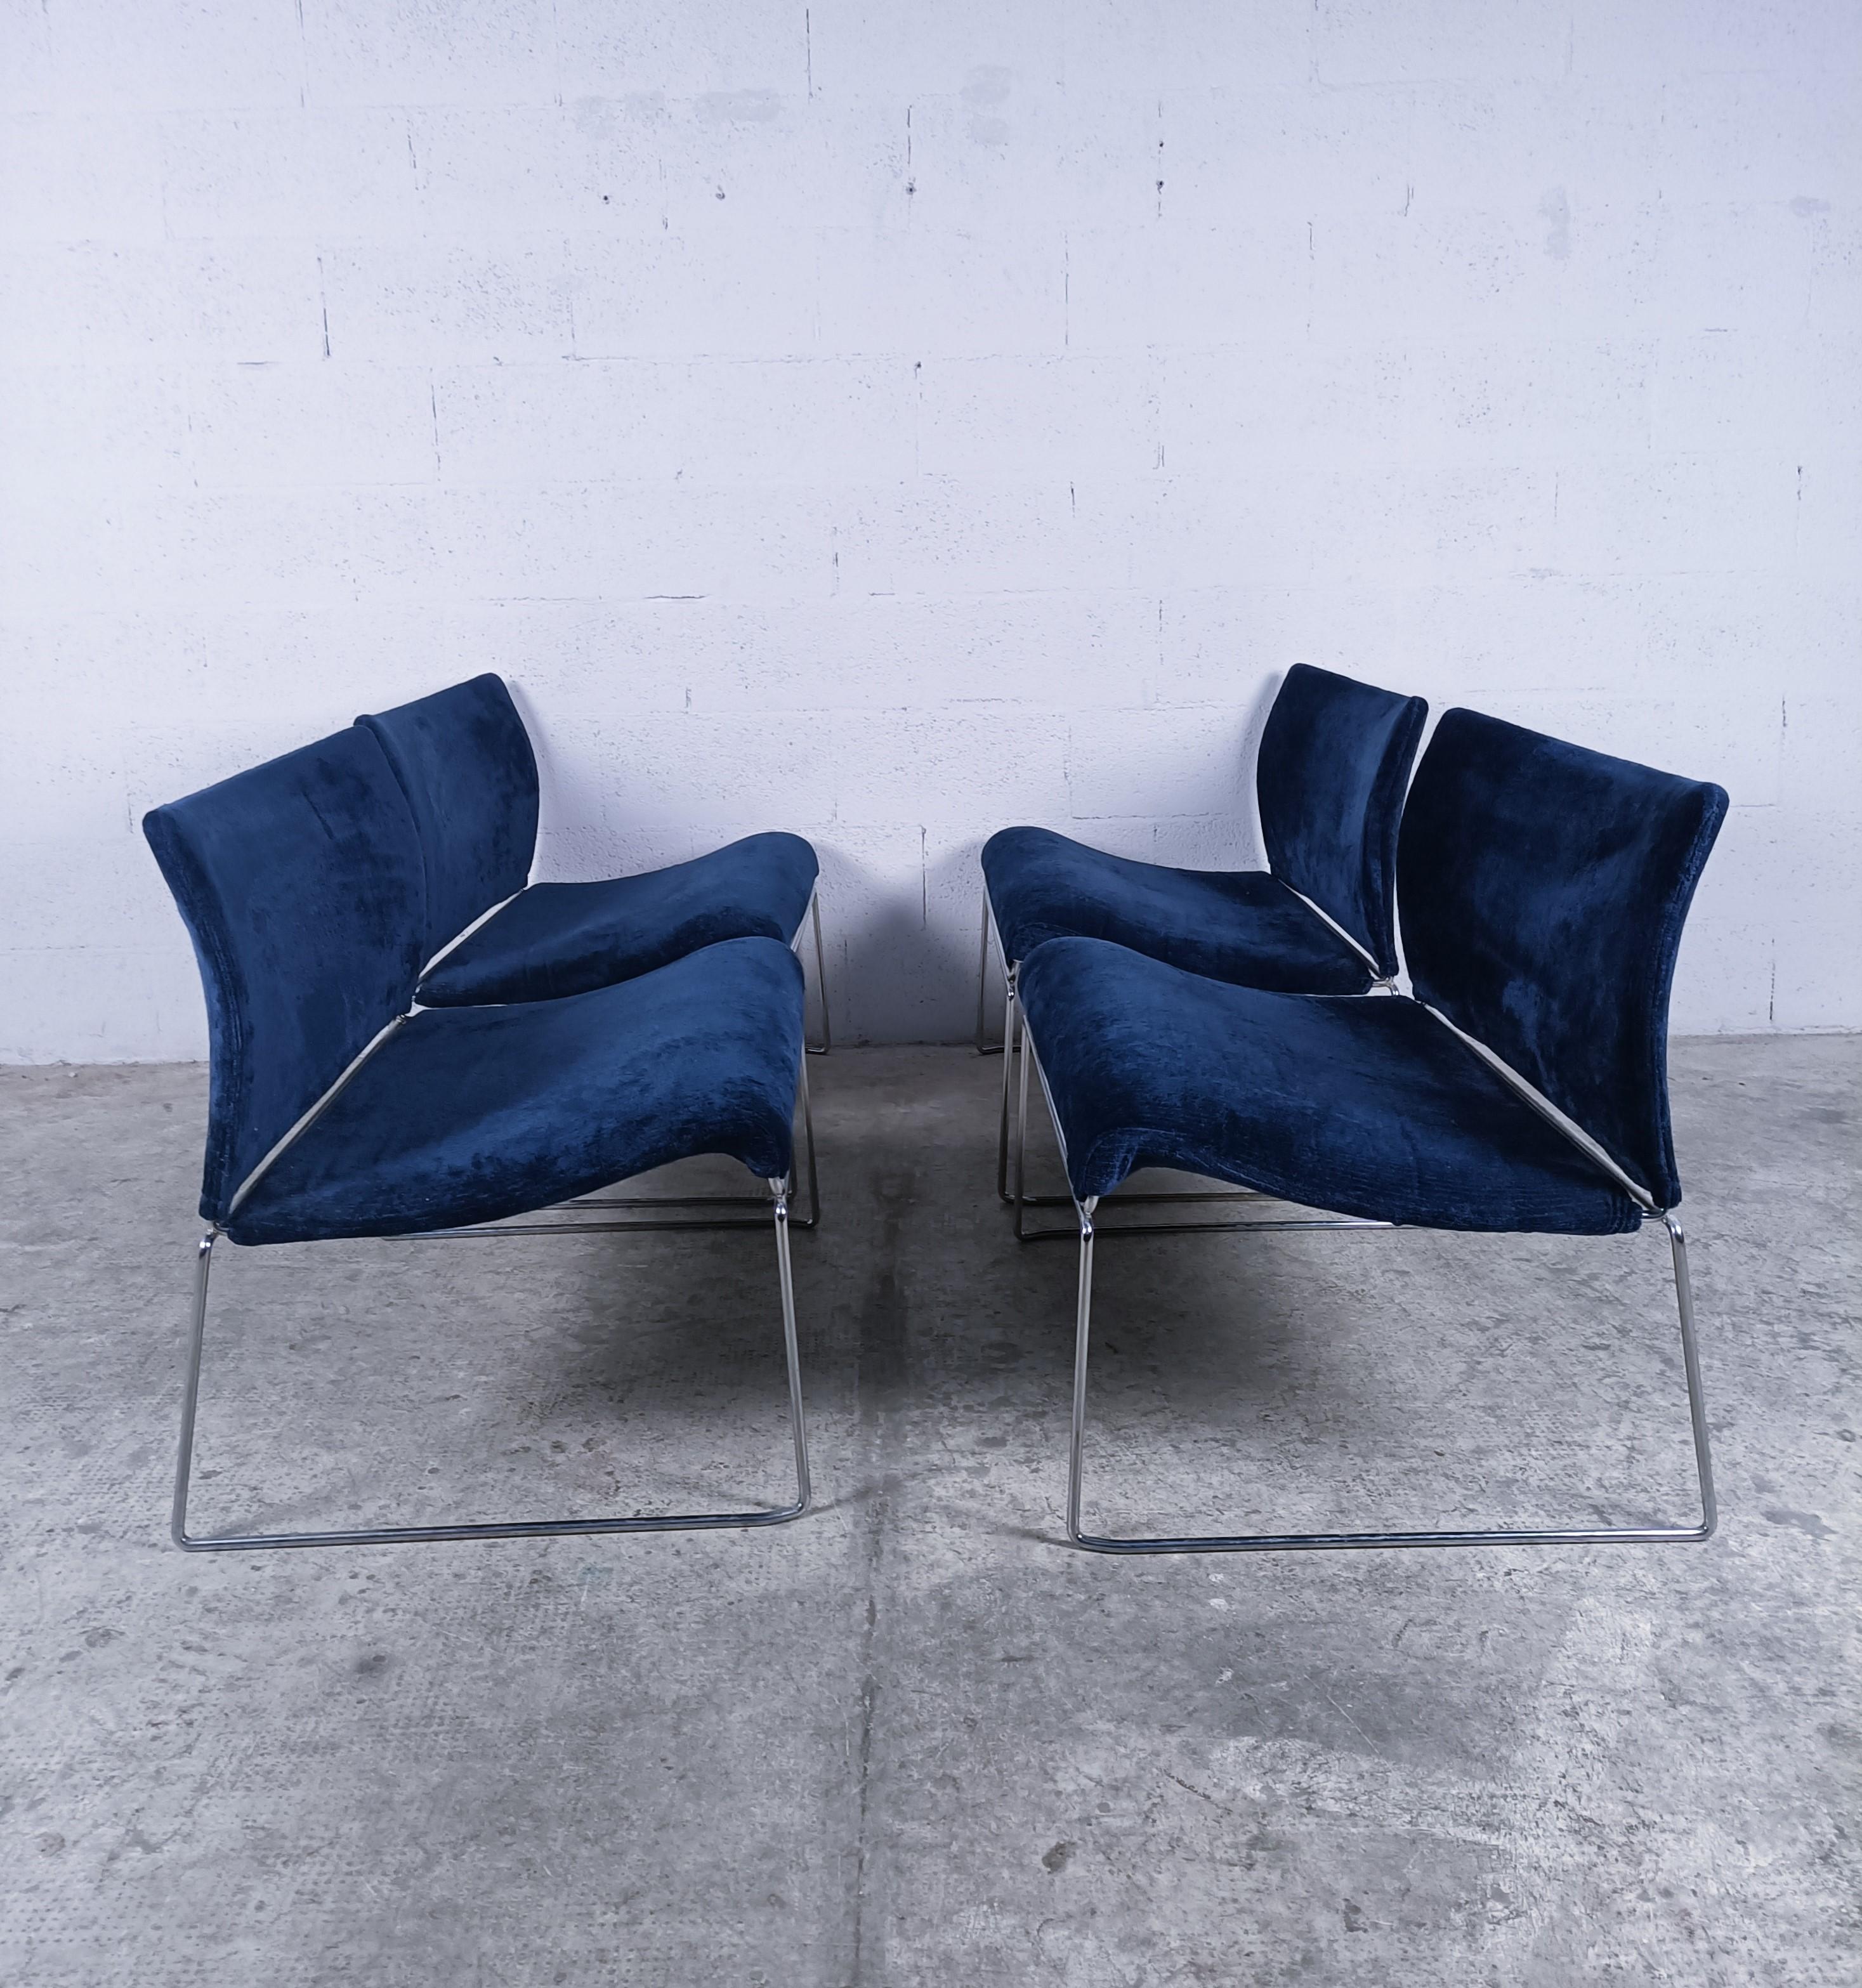 Set of 4 Saghi lounge chairs designed by Kazuhide Takahama for Simon Gavina in 1970s. 
The frames are made of solid bent steel chromed, upholstered in blue velvet.
The 